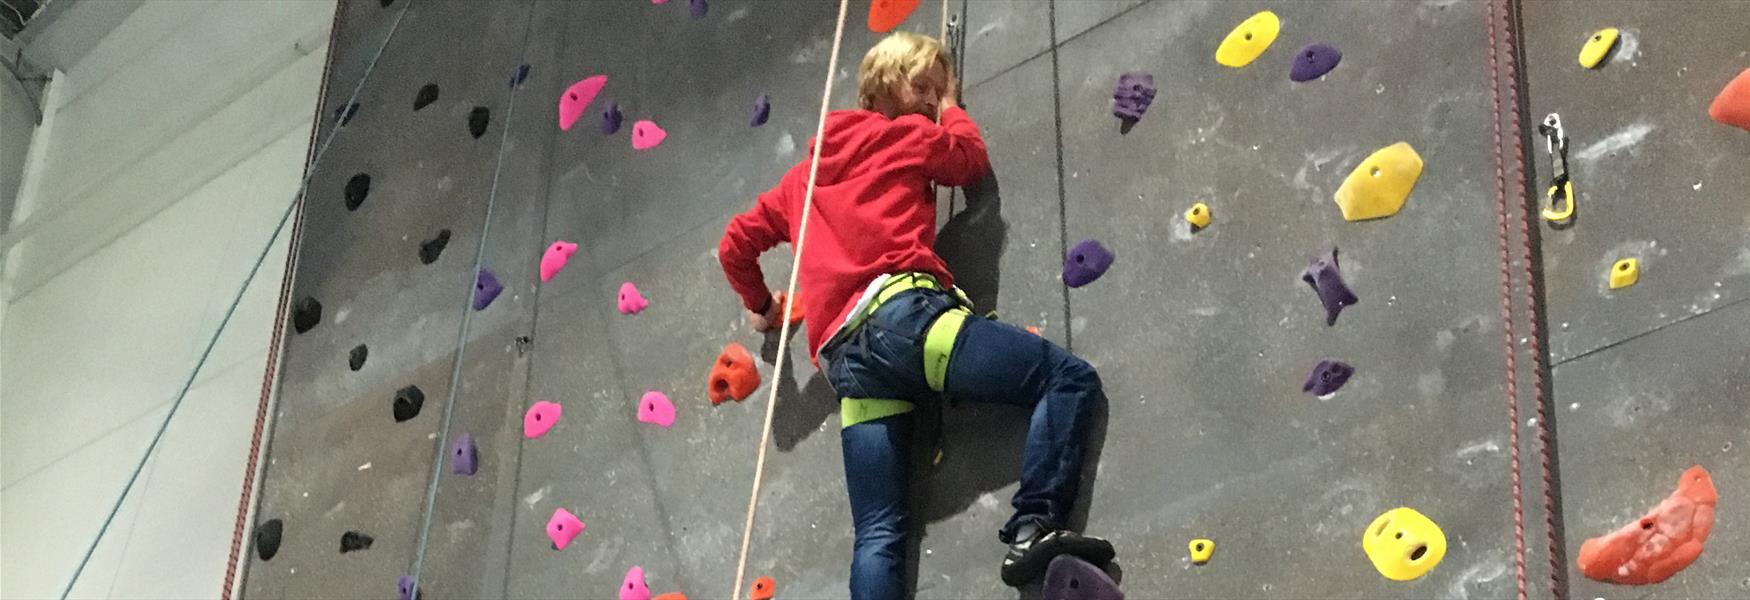 lady climbs on an indoor climbing wall